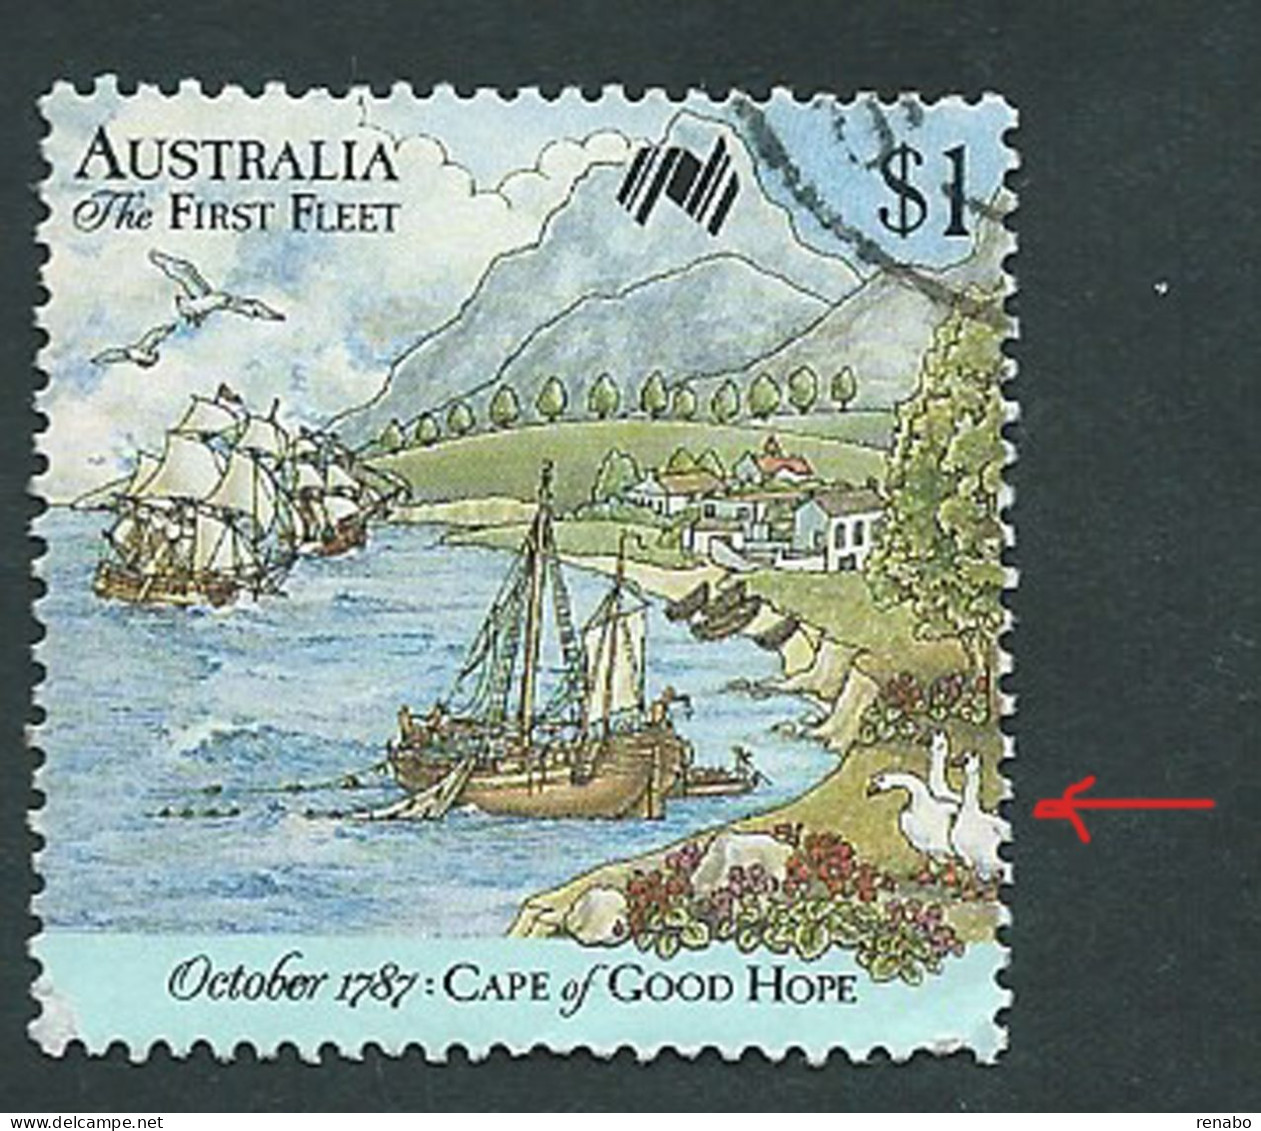 Australia, Australien, Australie 1987; Oche, Geese:The First Fleet. $ 1. Used. - Geese